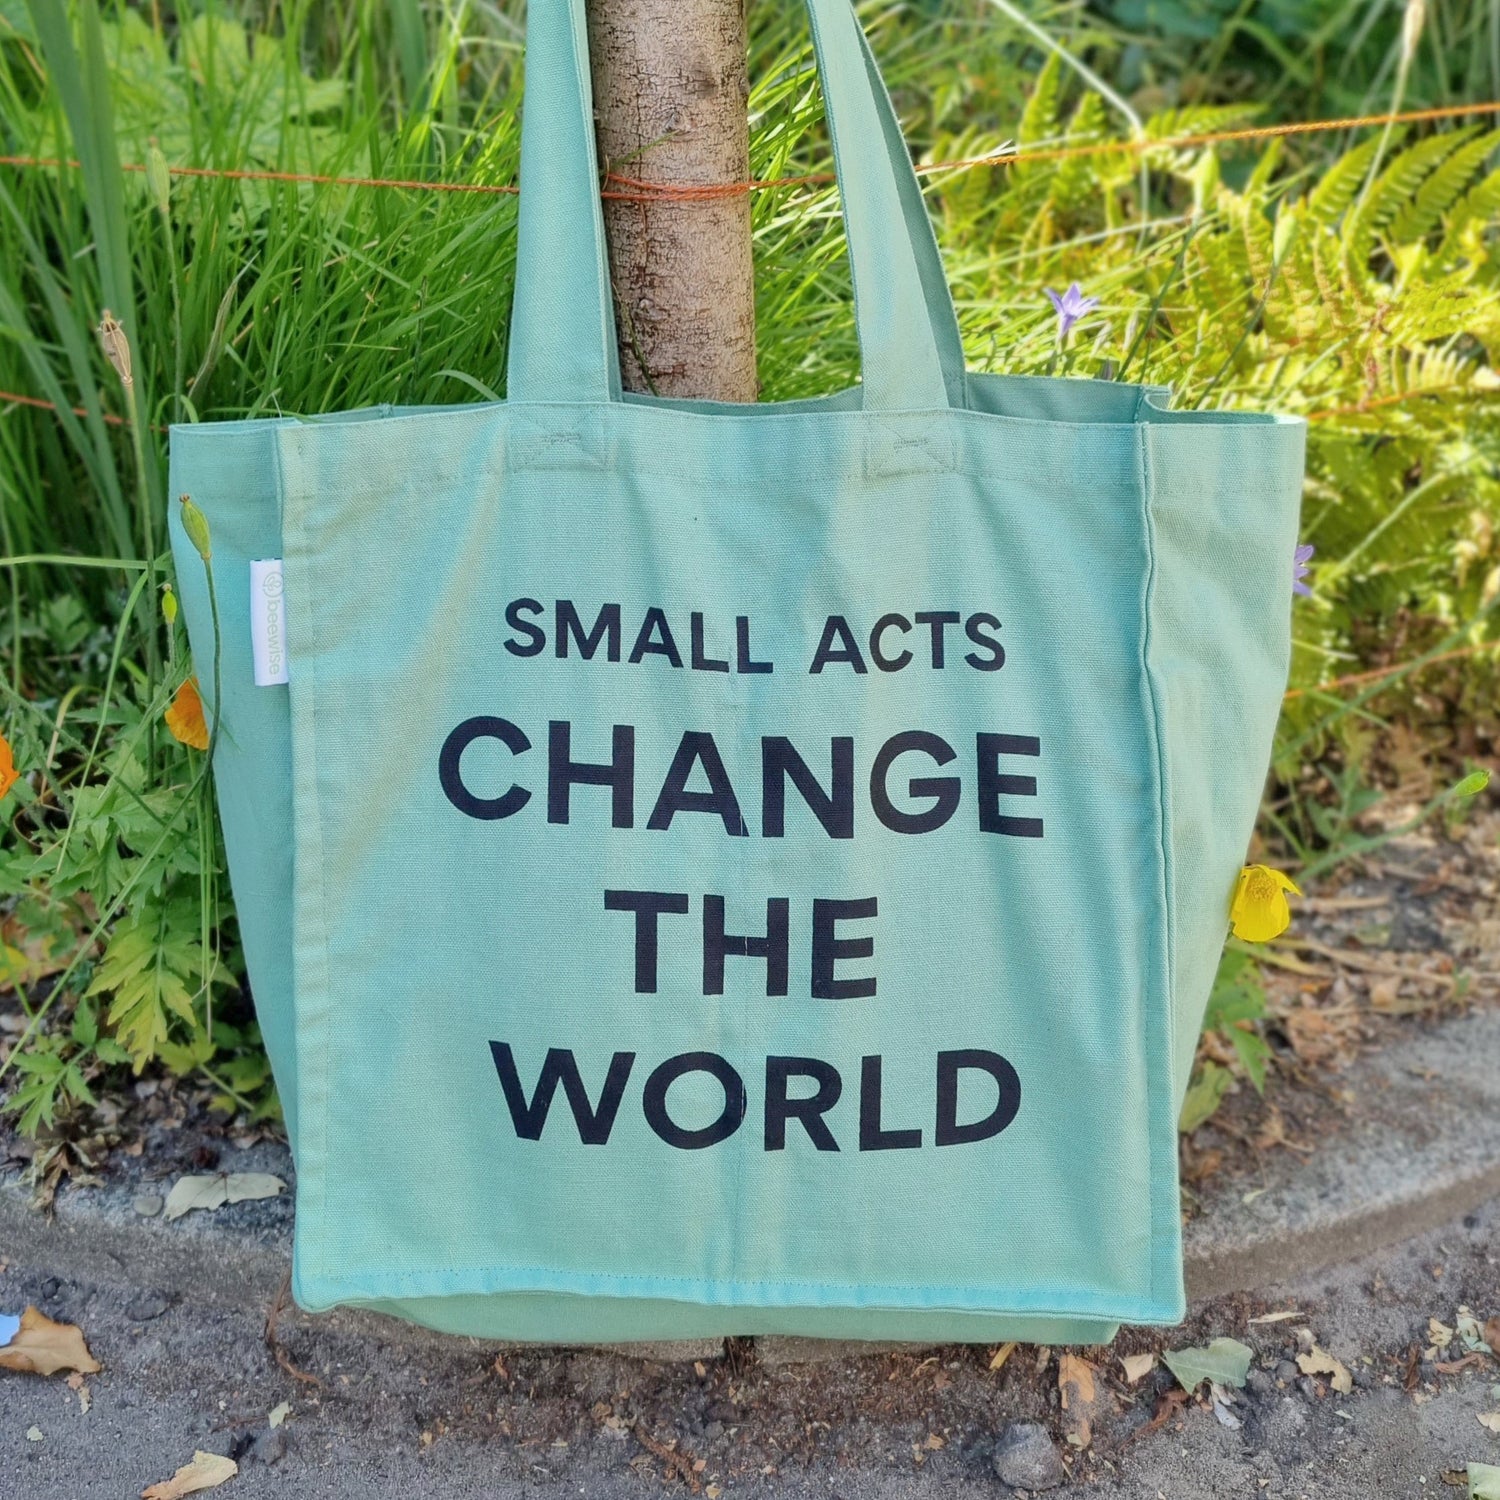 Organic Cotton Reusable Market Tote Bag with Bottle Pockets Single